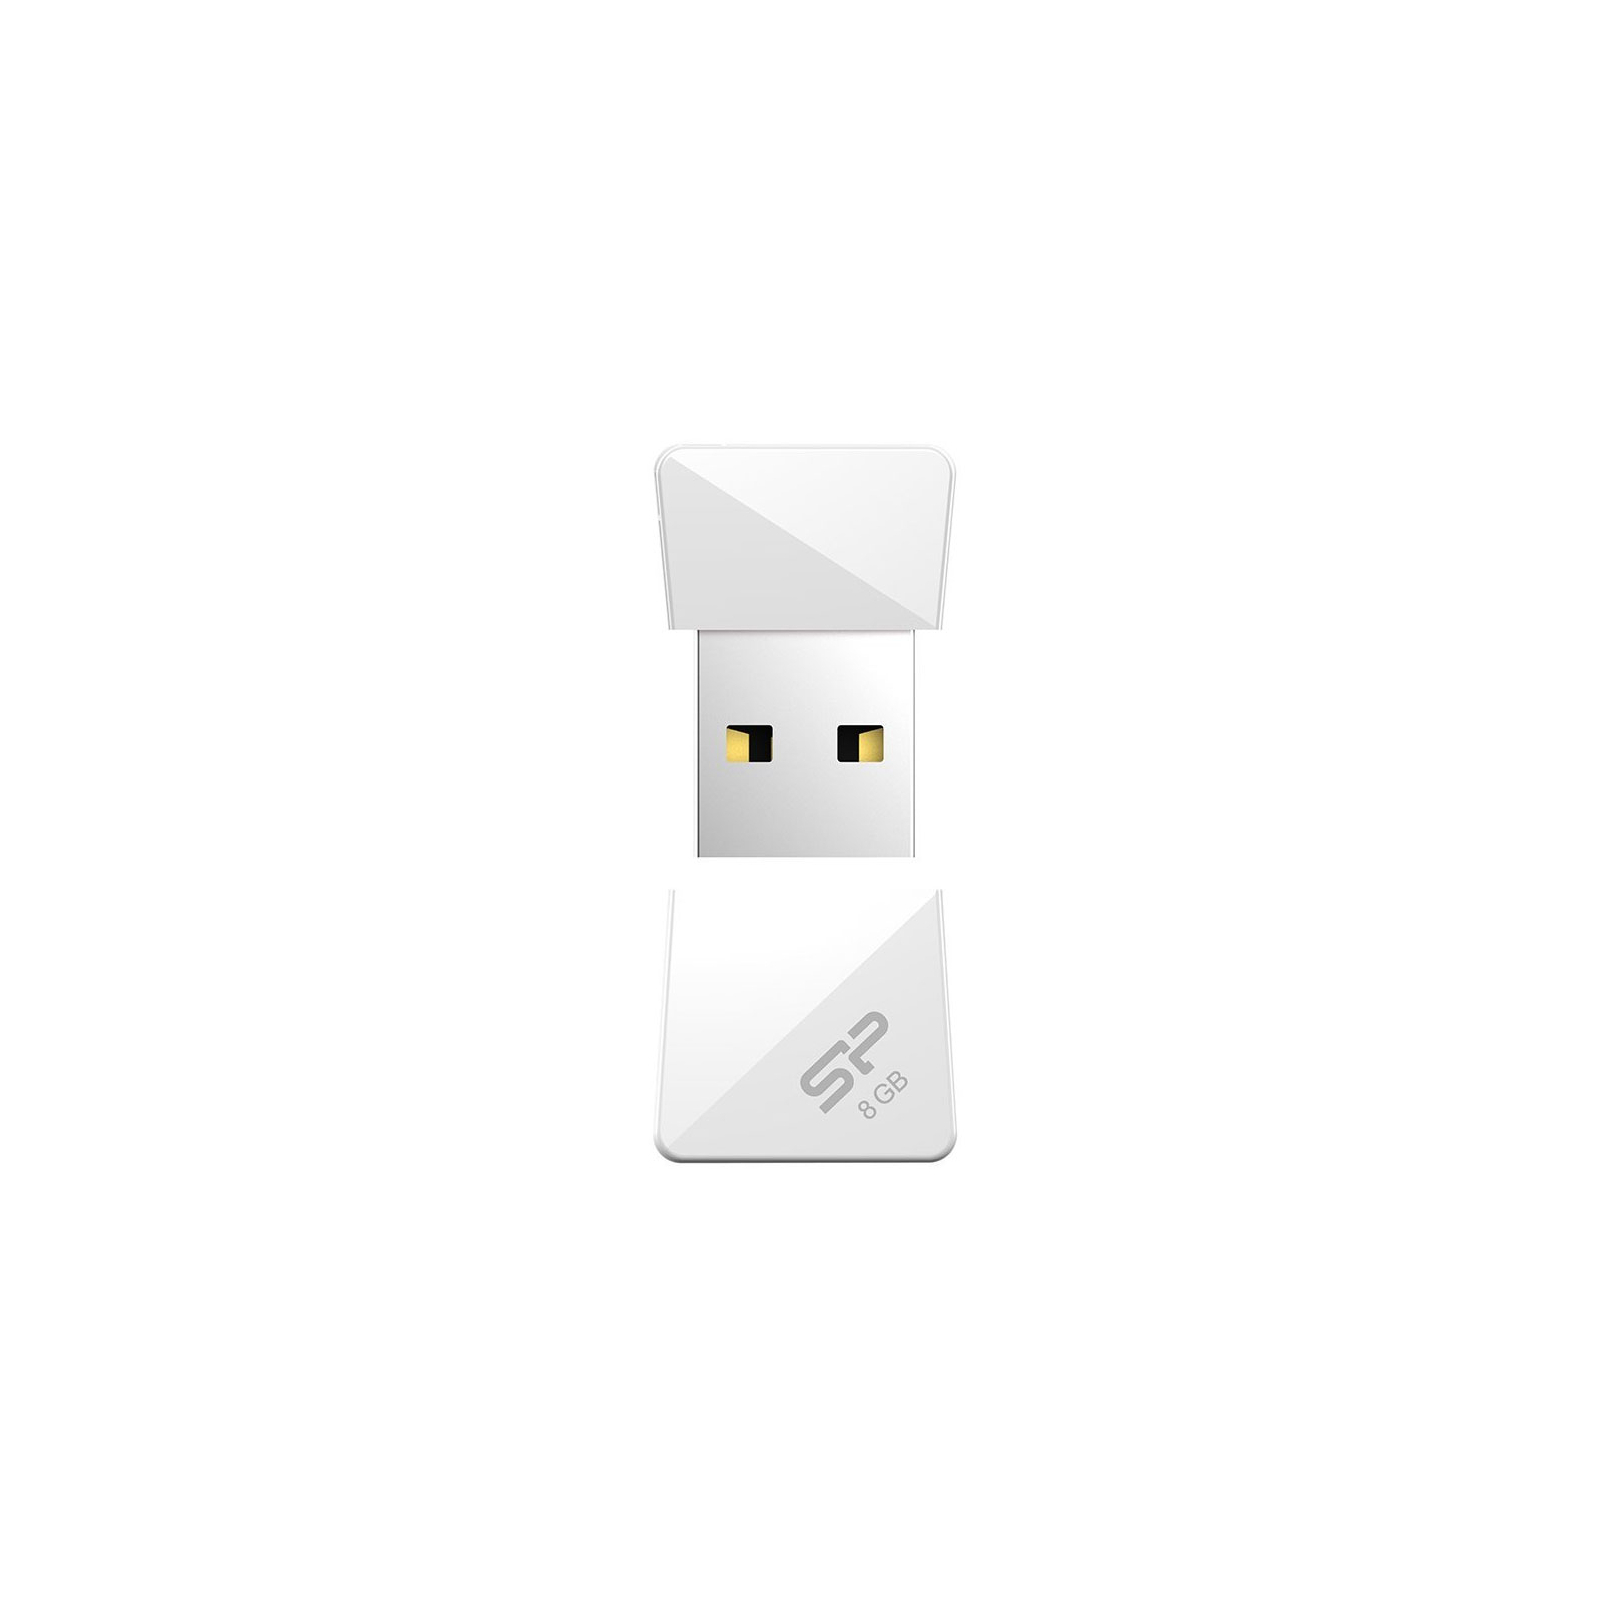 USB флеш накопитель Silicon Power 8Gb Touch T08 White USB 2.0 (SP008GBUF2T08V1W) изображение 3